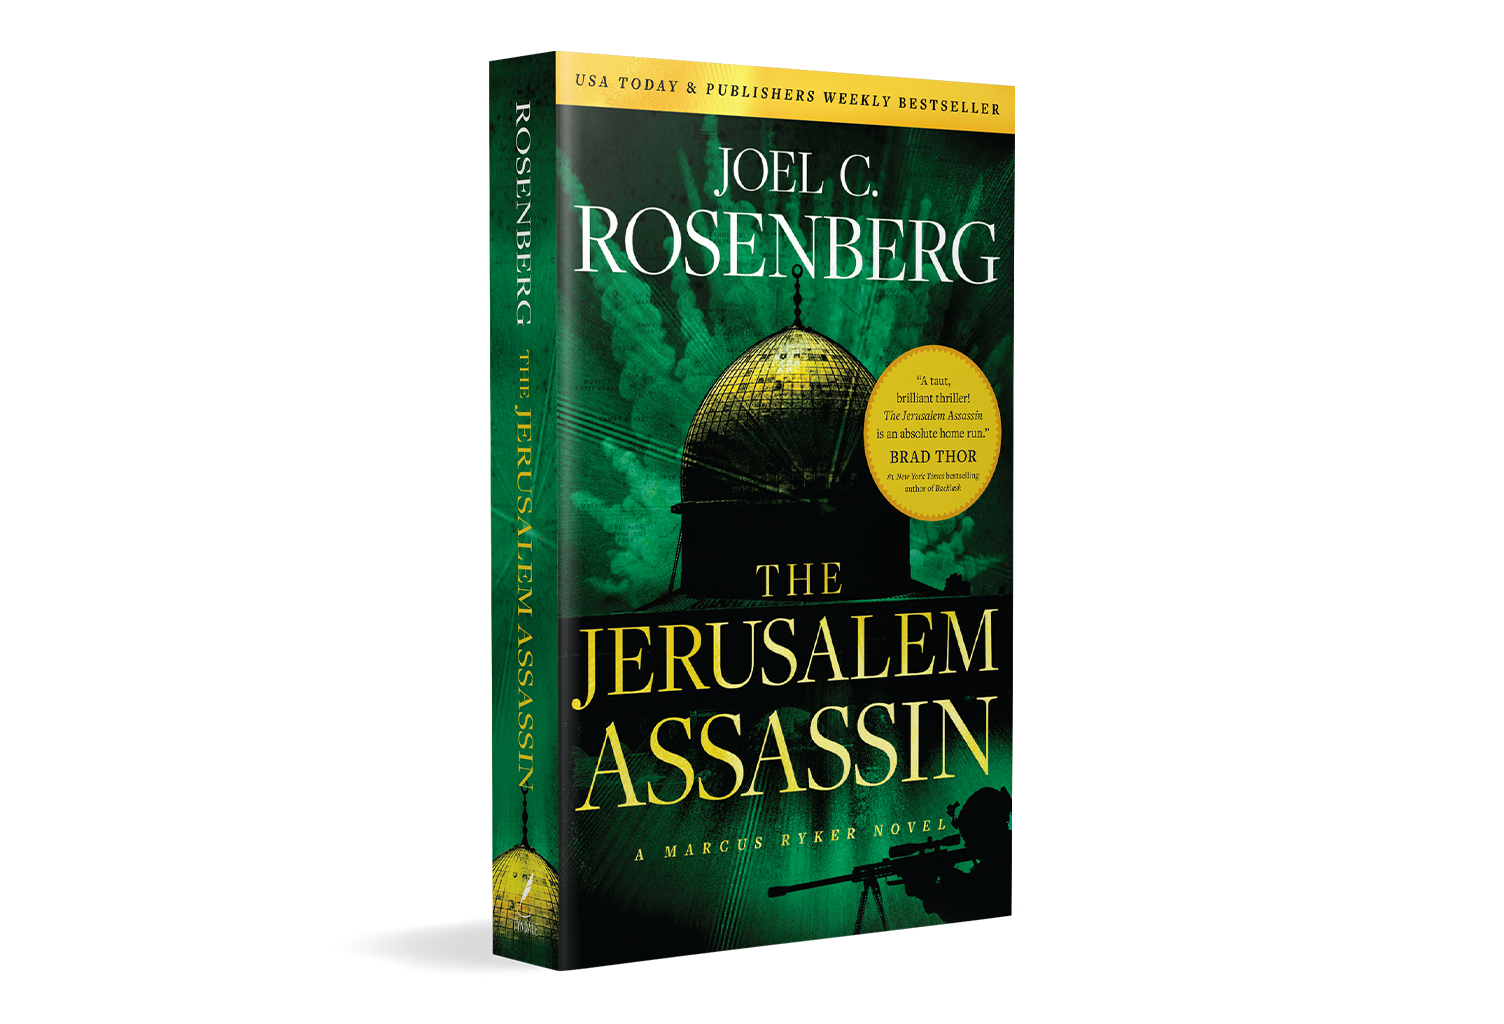 Receive The Jerusalem Assassin by Joel C. Rosenberg from TBN